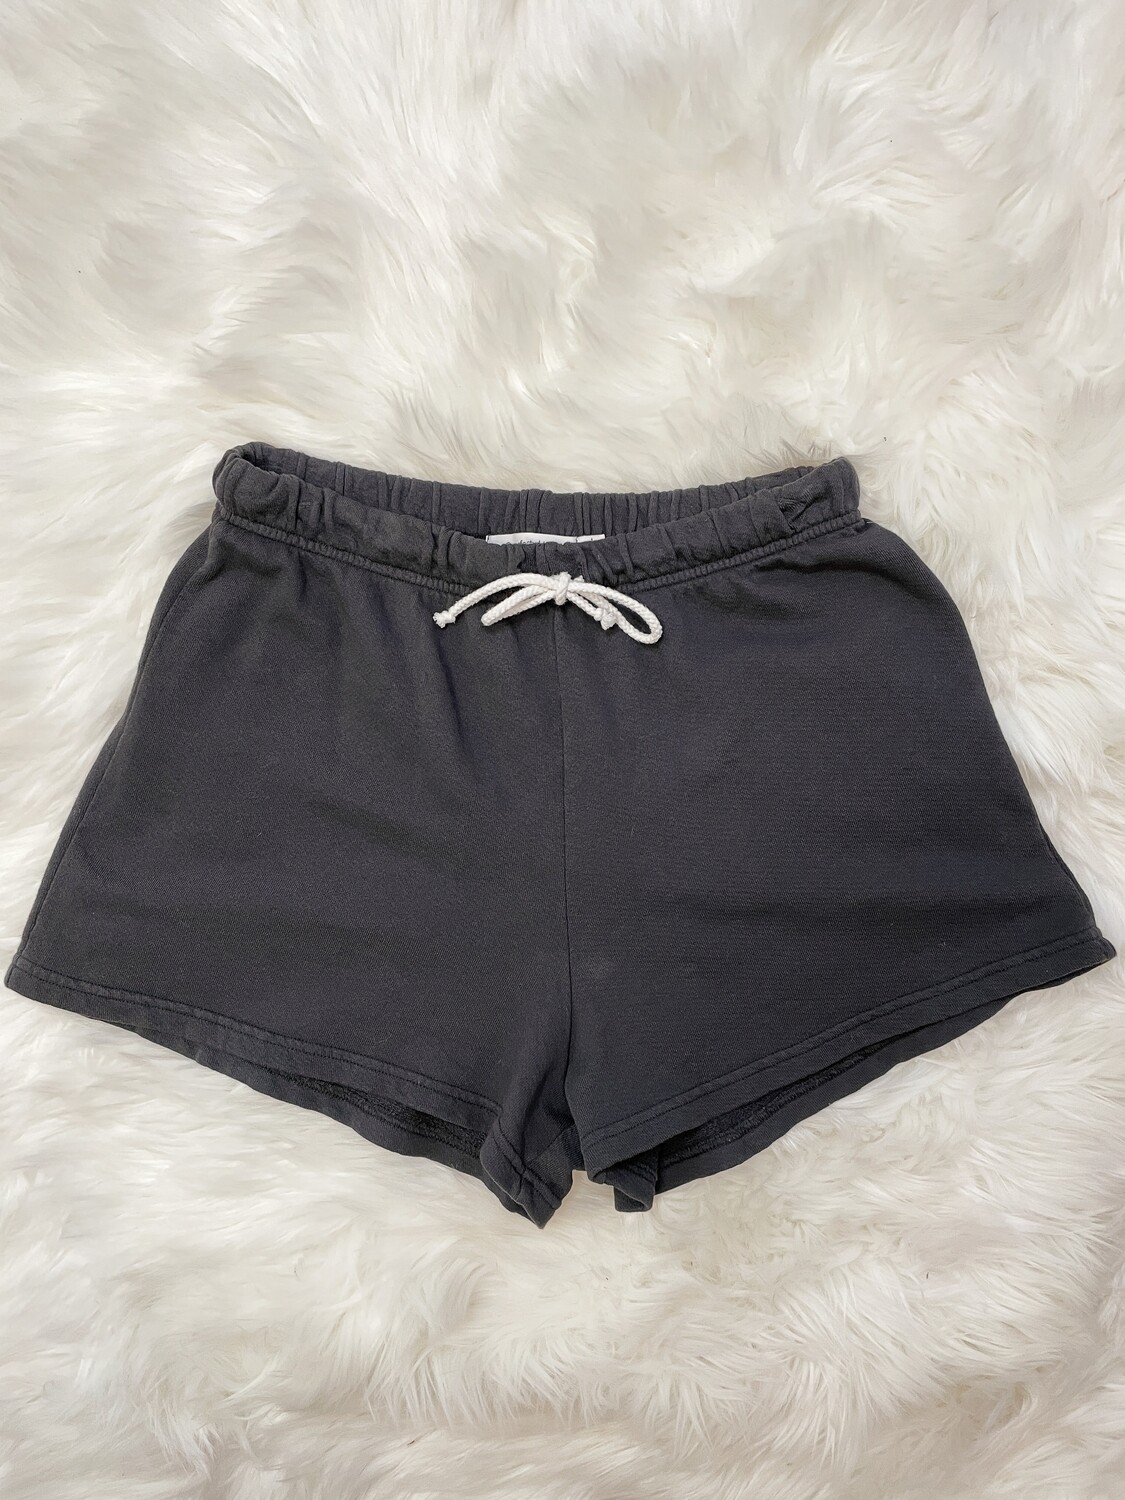 Perfect White Tee Black Drawstring Shorts - L